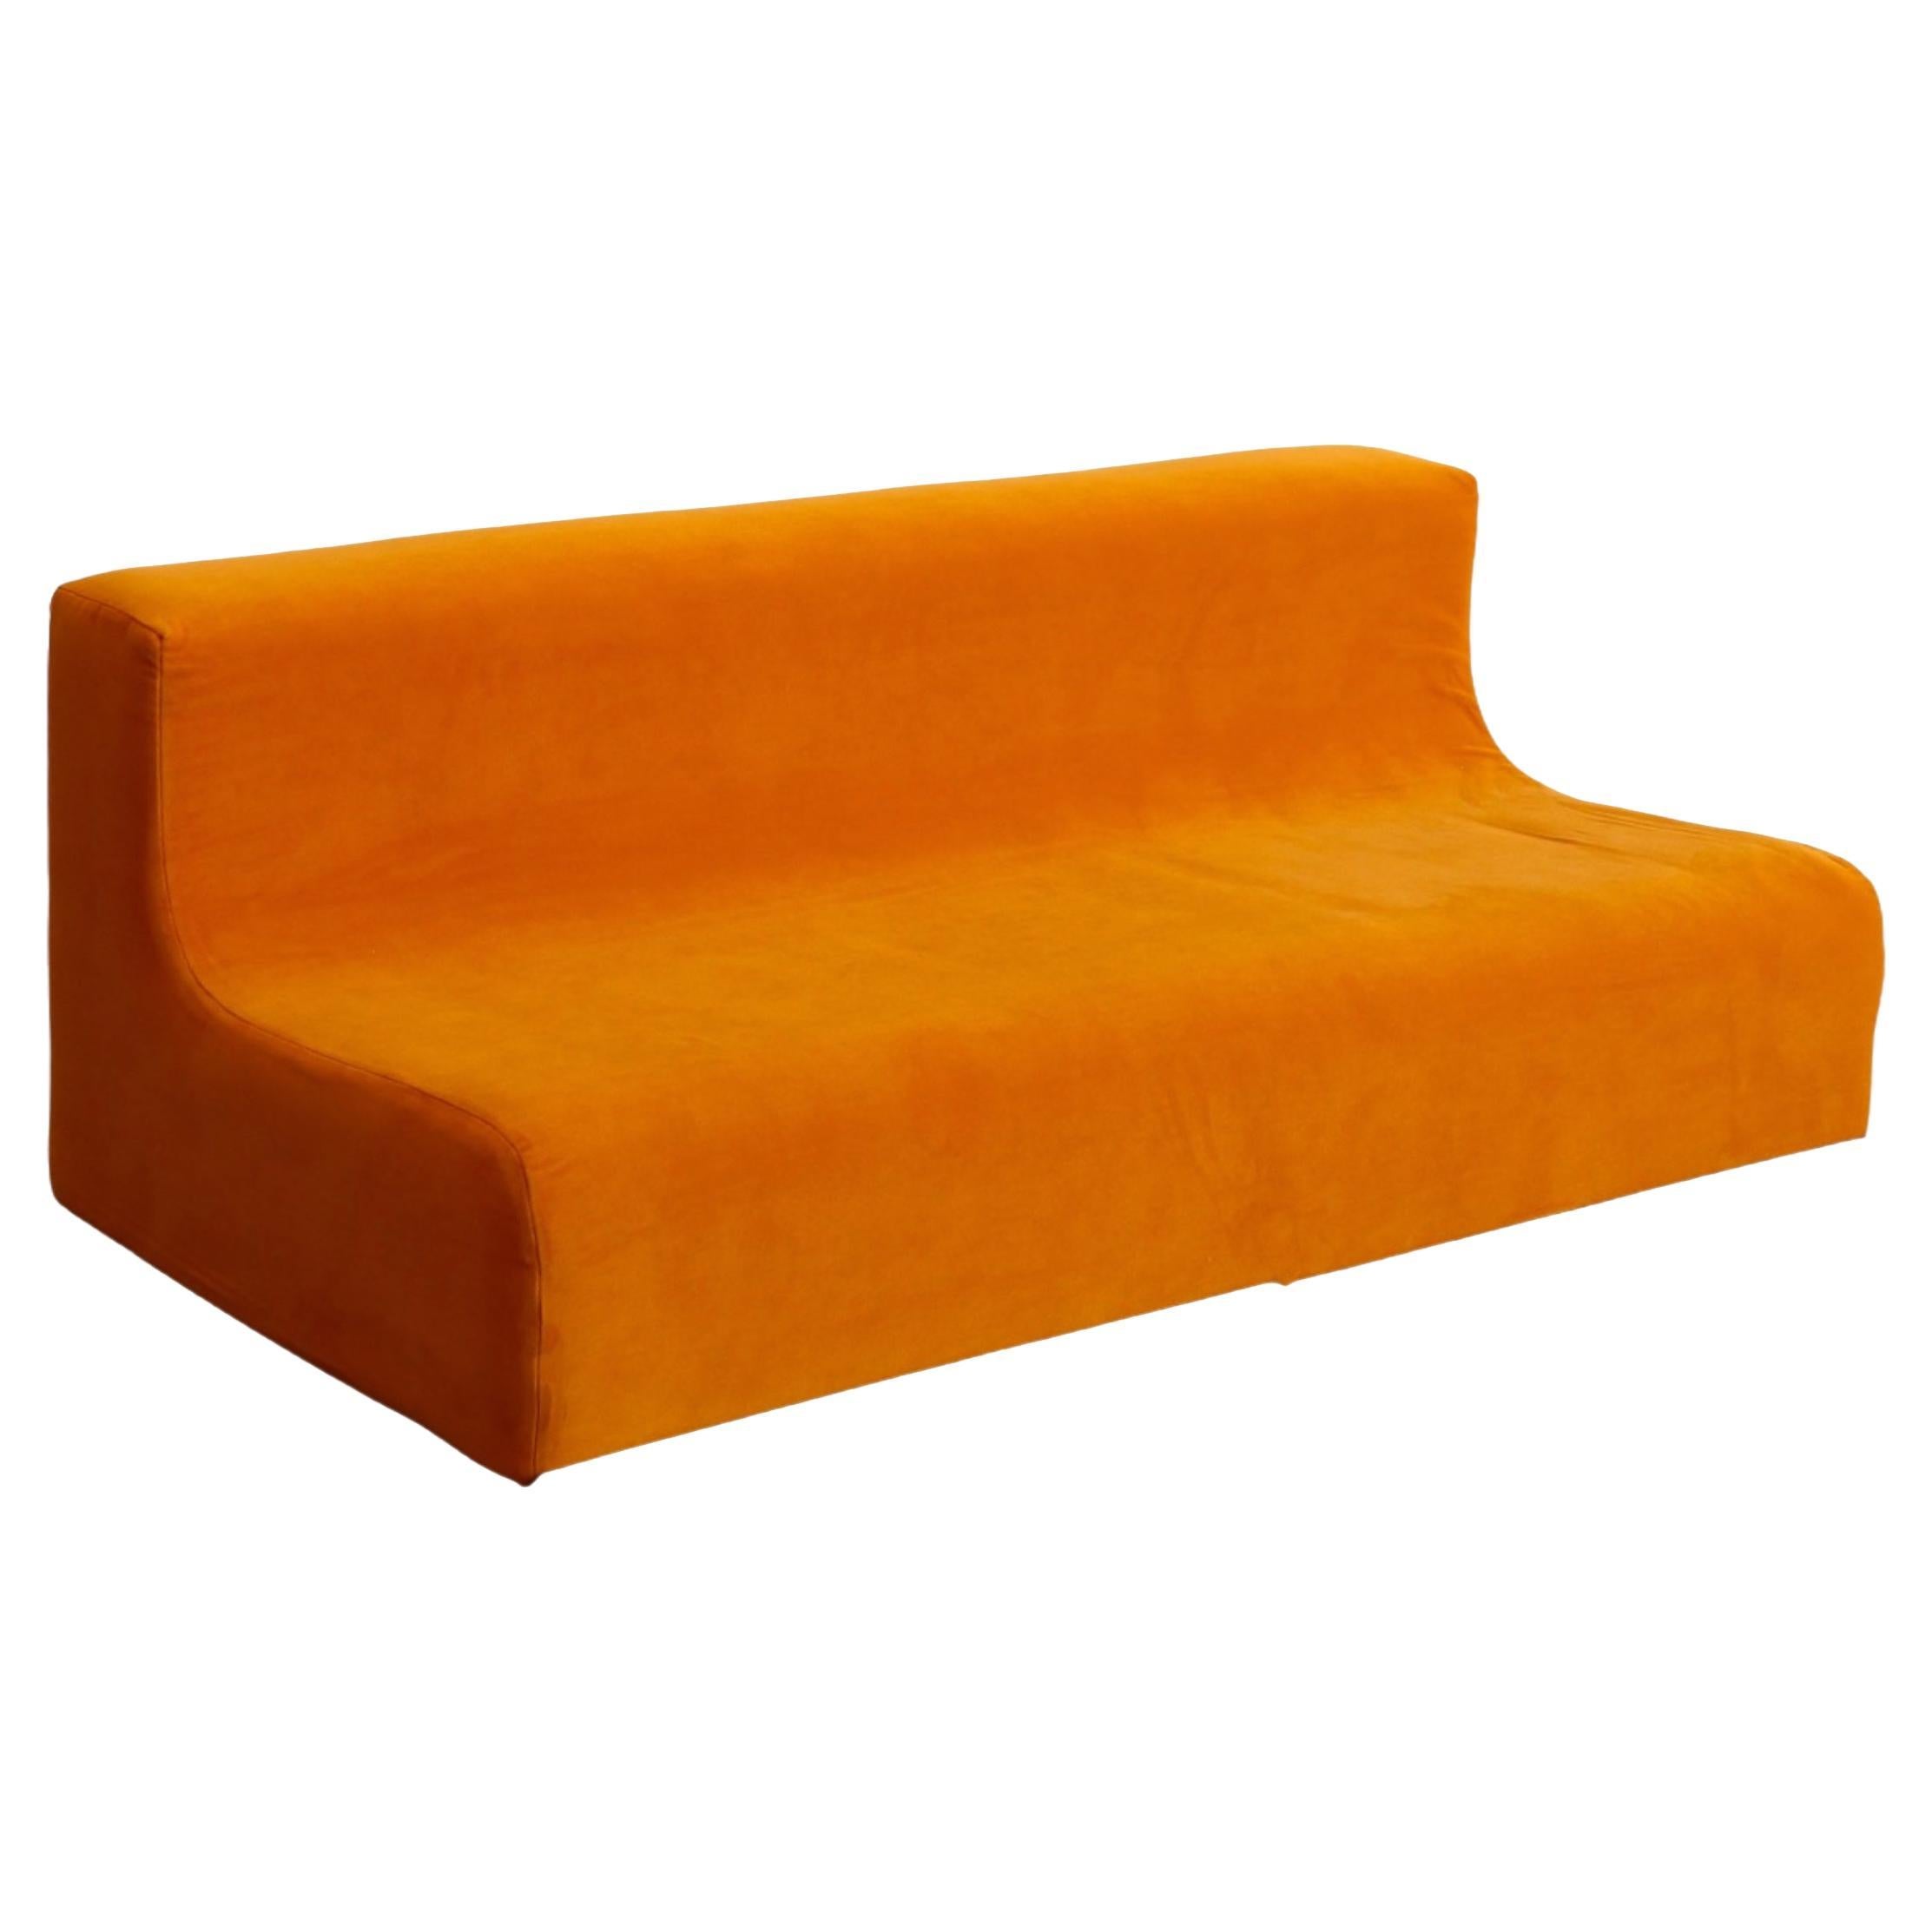 Space Age Dreisitzer-Sofa in Orange, Space Age